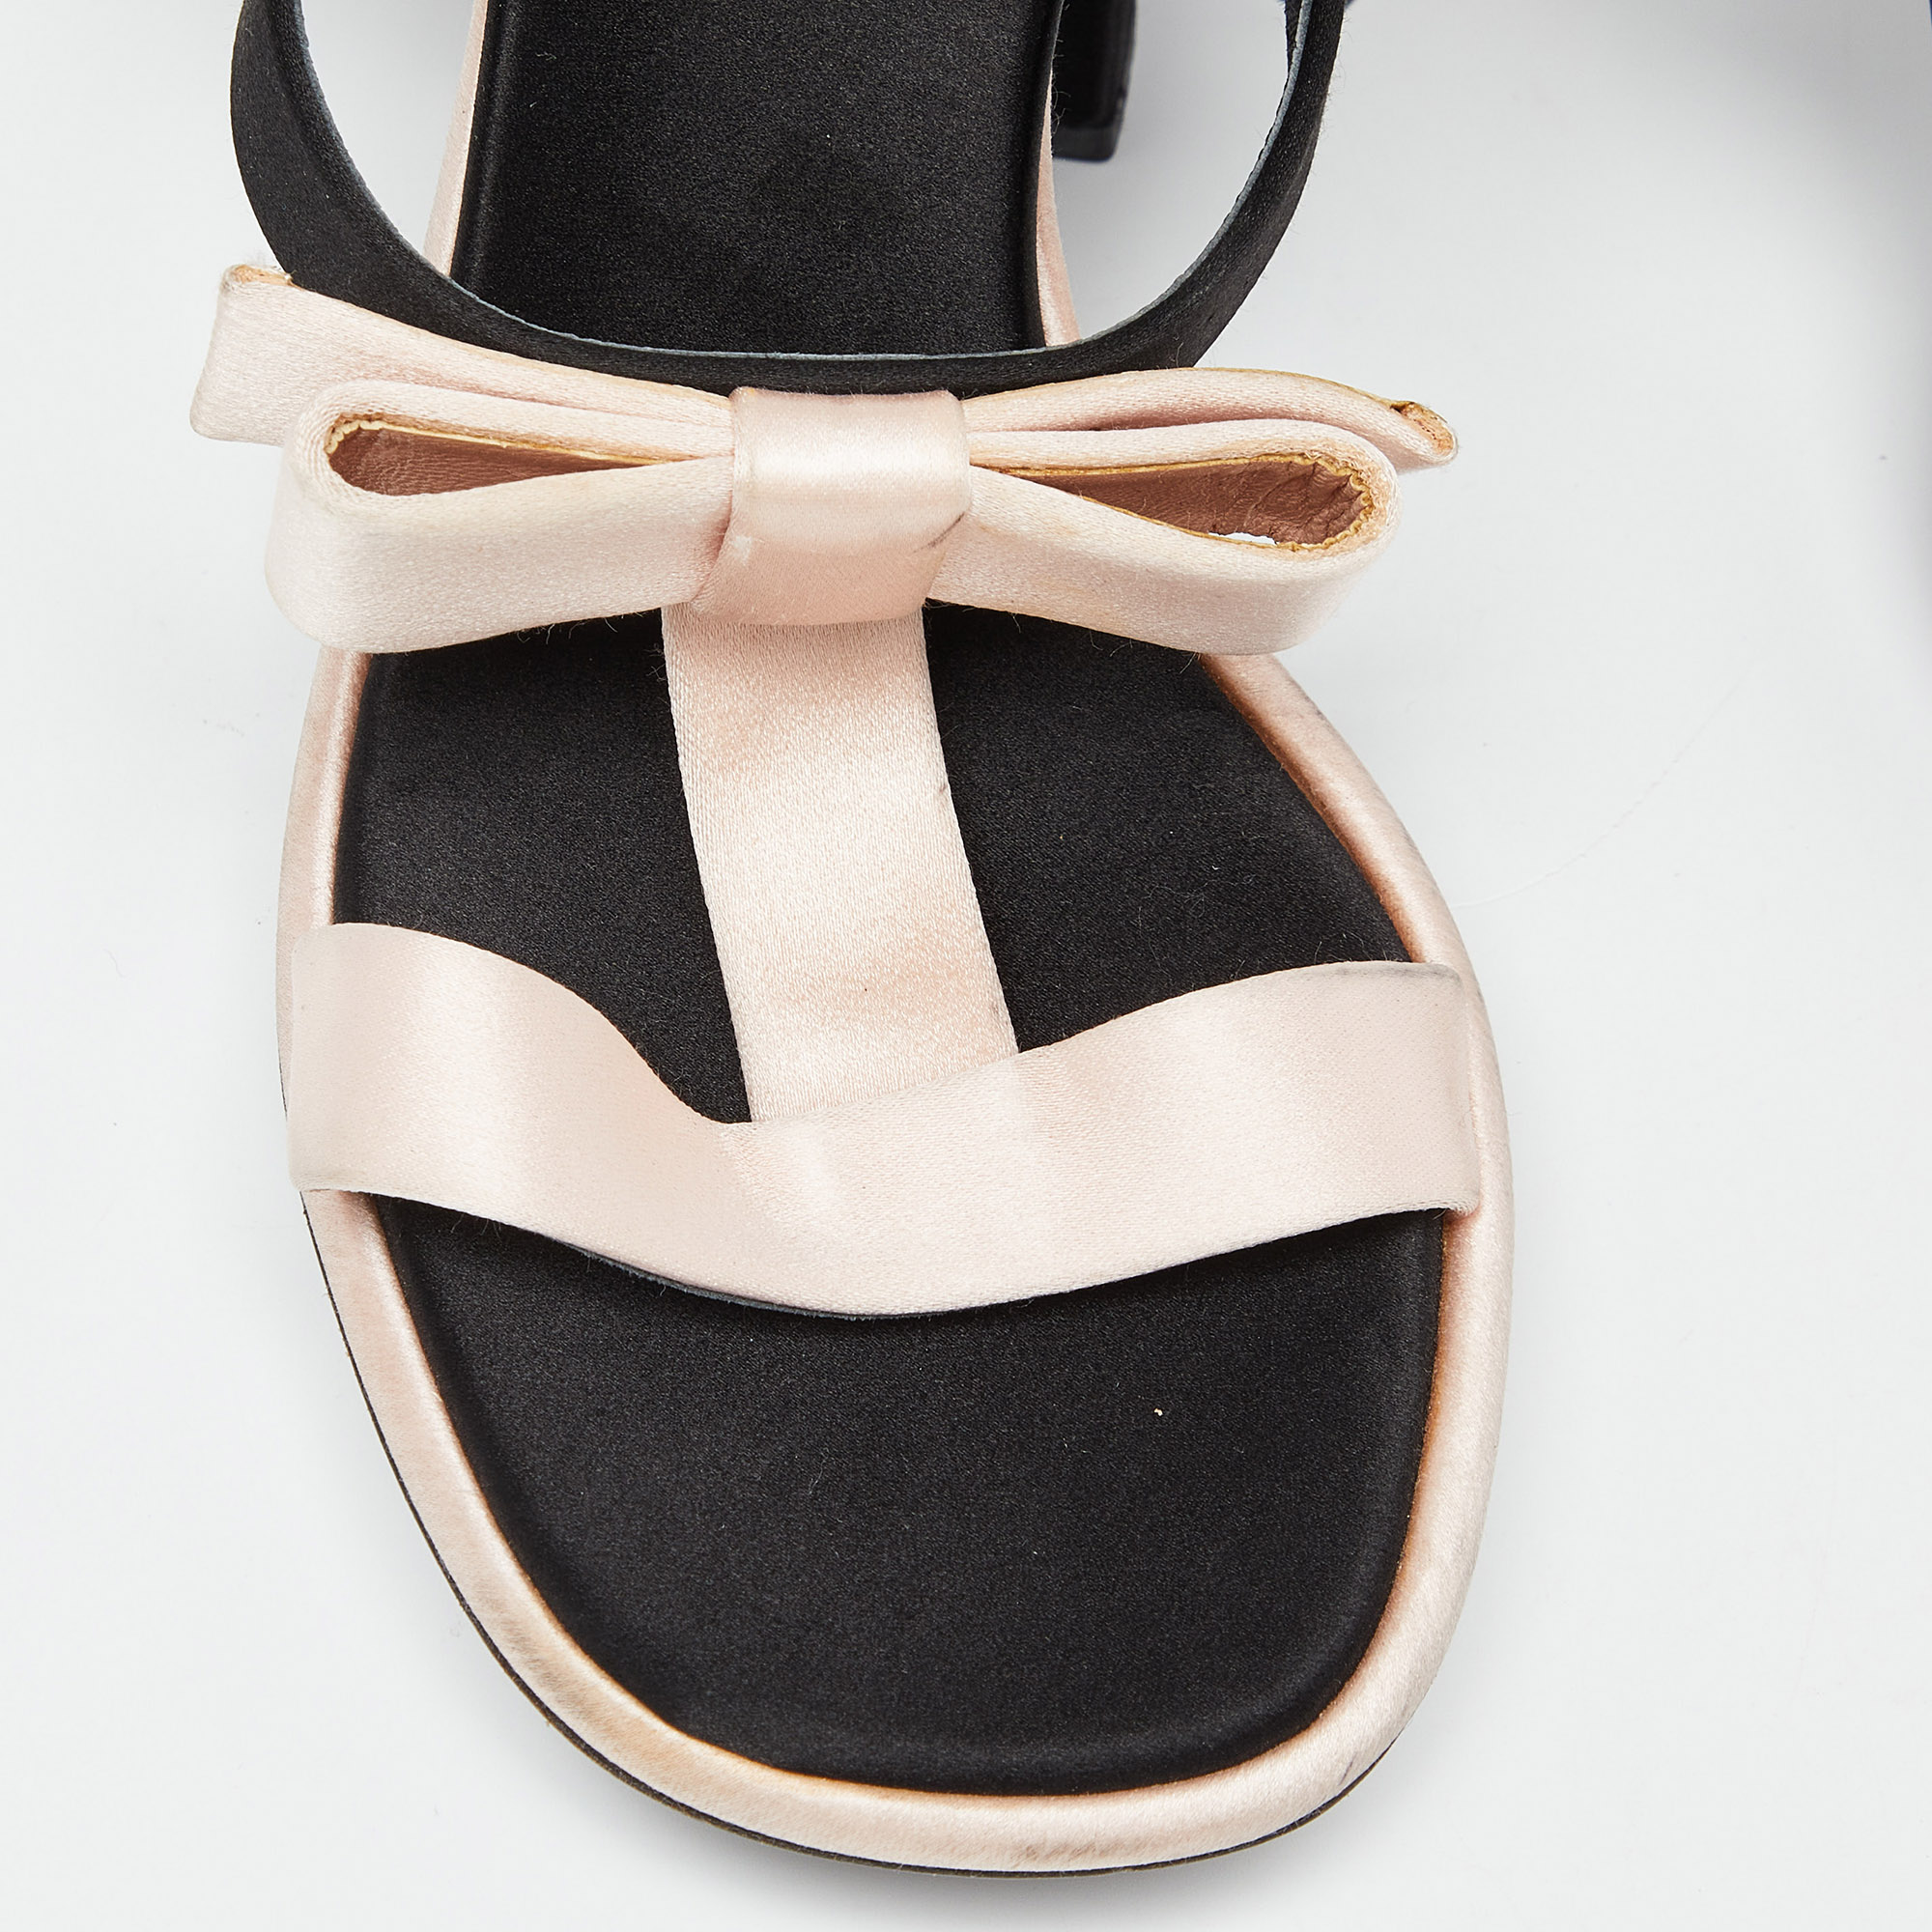 Prada Pink/Black Satin Bow T-Bar Ankle Strap Sandals Size 39